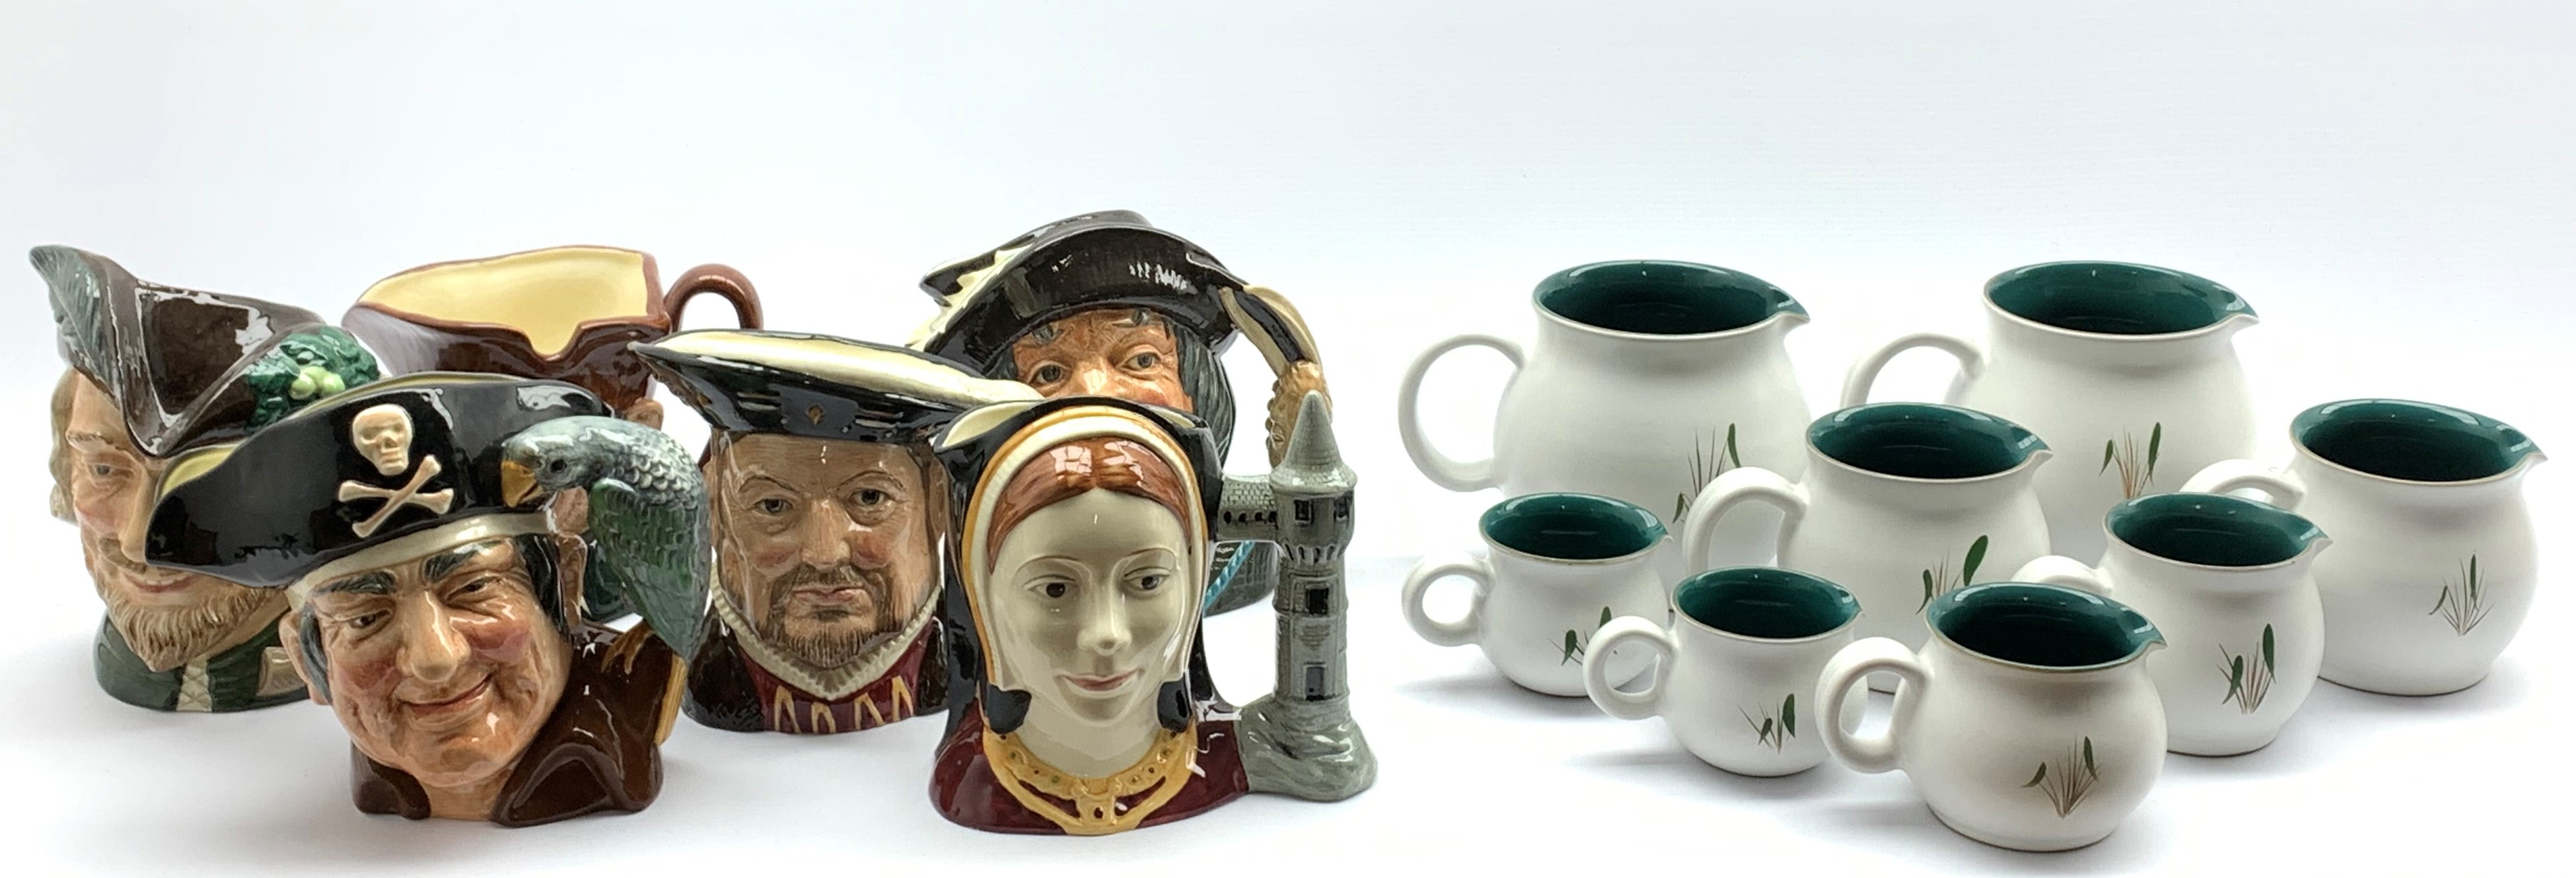 Six Royal Doulton large character jugs, - Image 3 of 4